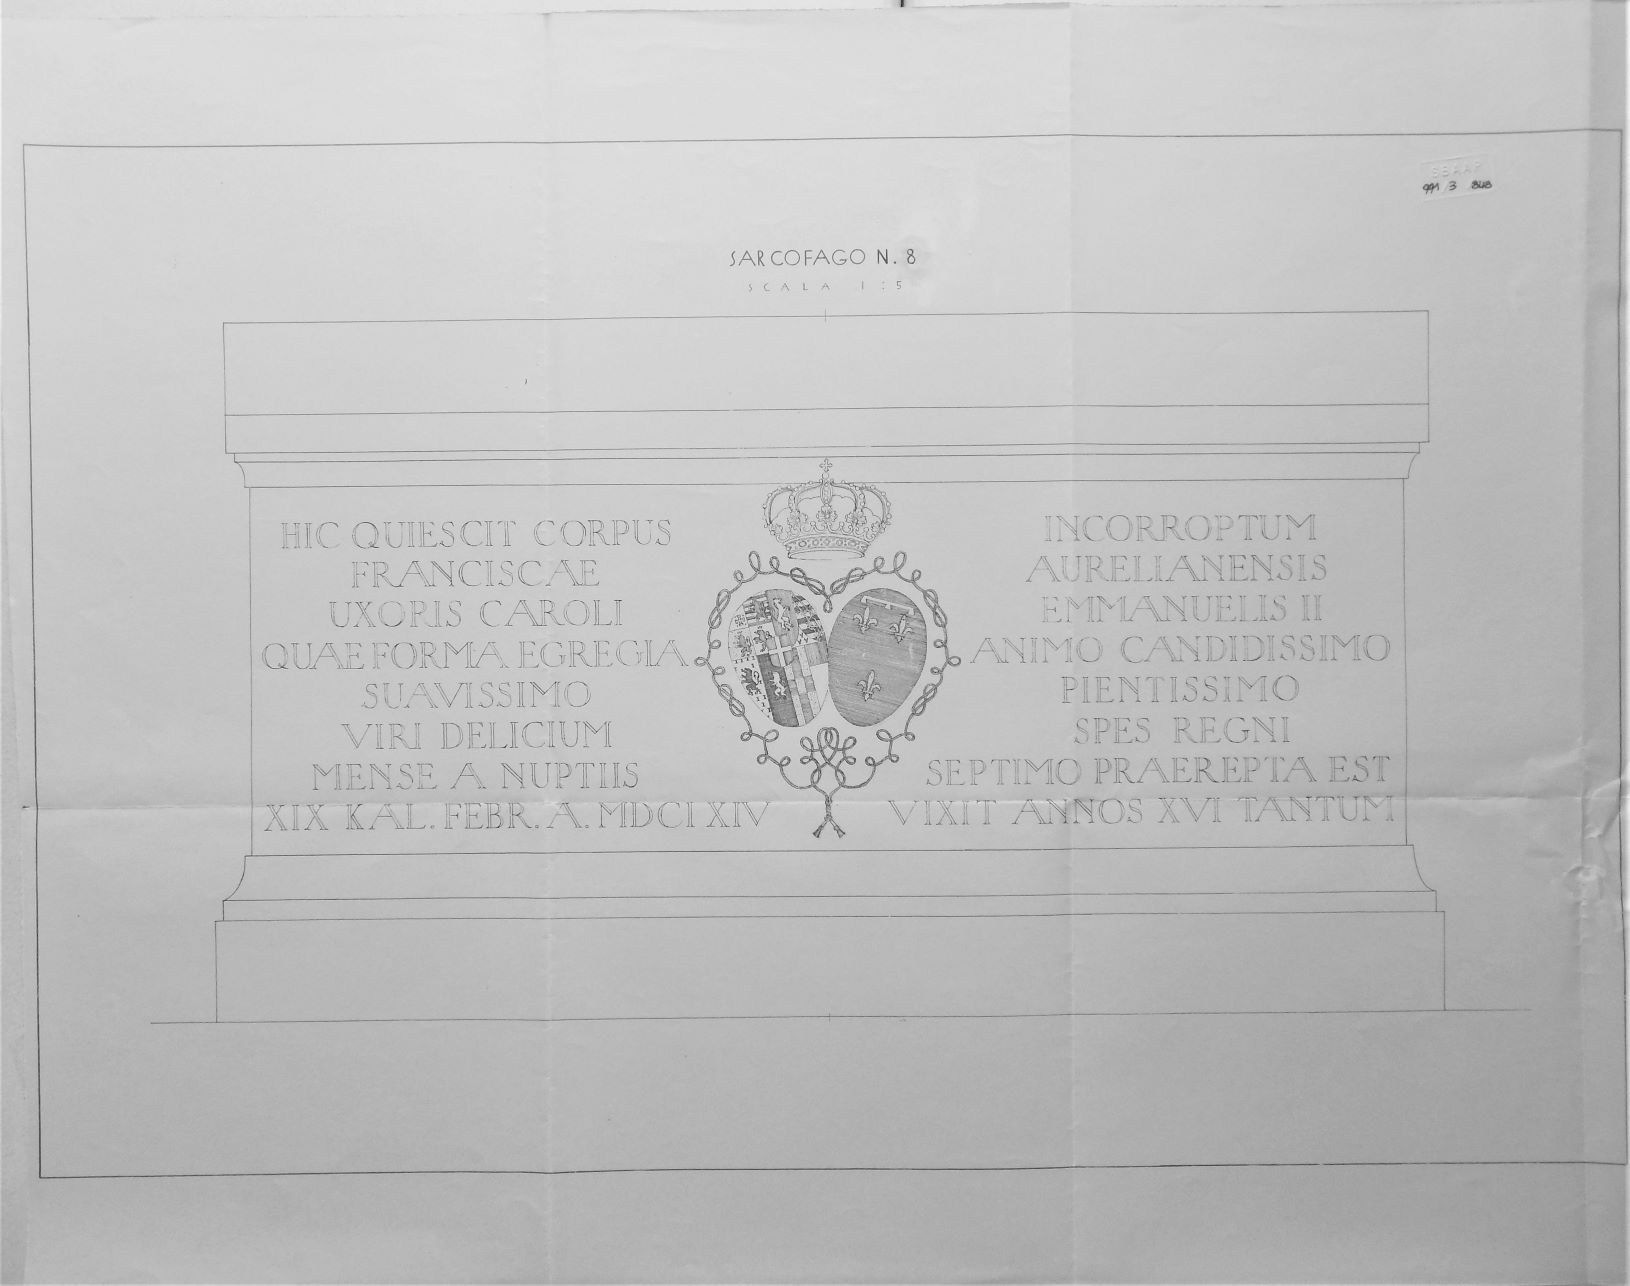 Sacra di San Michele/ Sarcofago n. 8 - scala 1:5, Sacra di San Michele a Sant'Ambrogio di Susa (TO) - Sarcofago n. 8 - scala 1:5 (disegno) di Chierici Umberto (cerchia) (secondo quarto sec. XX)